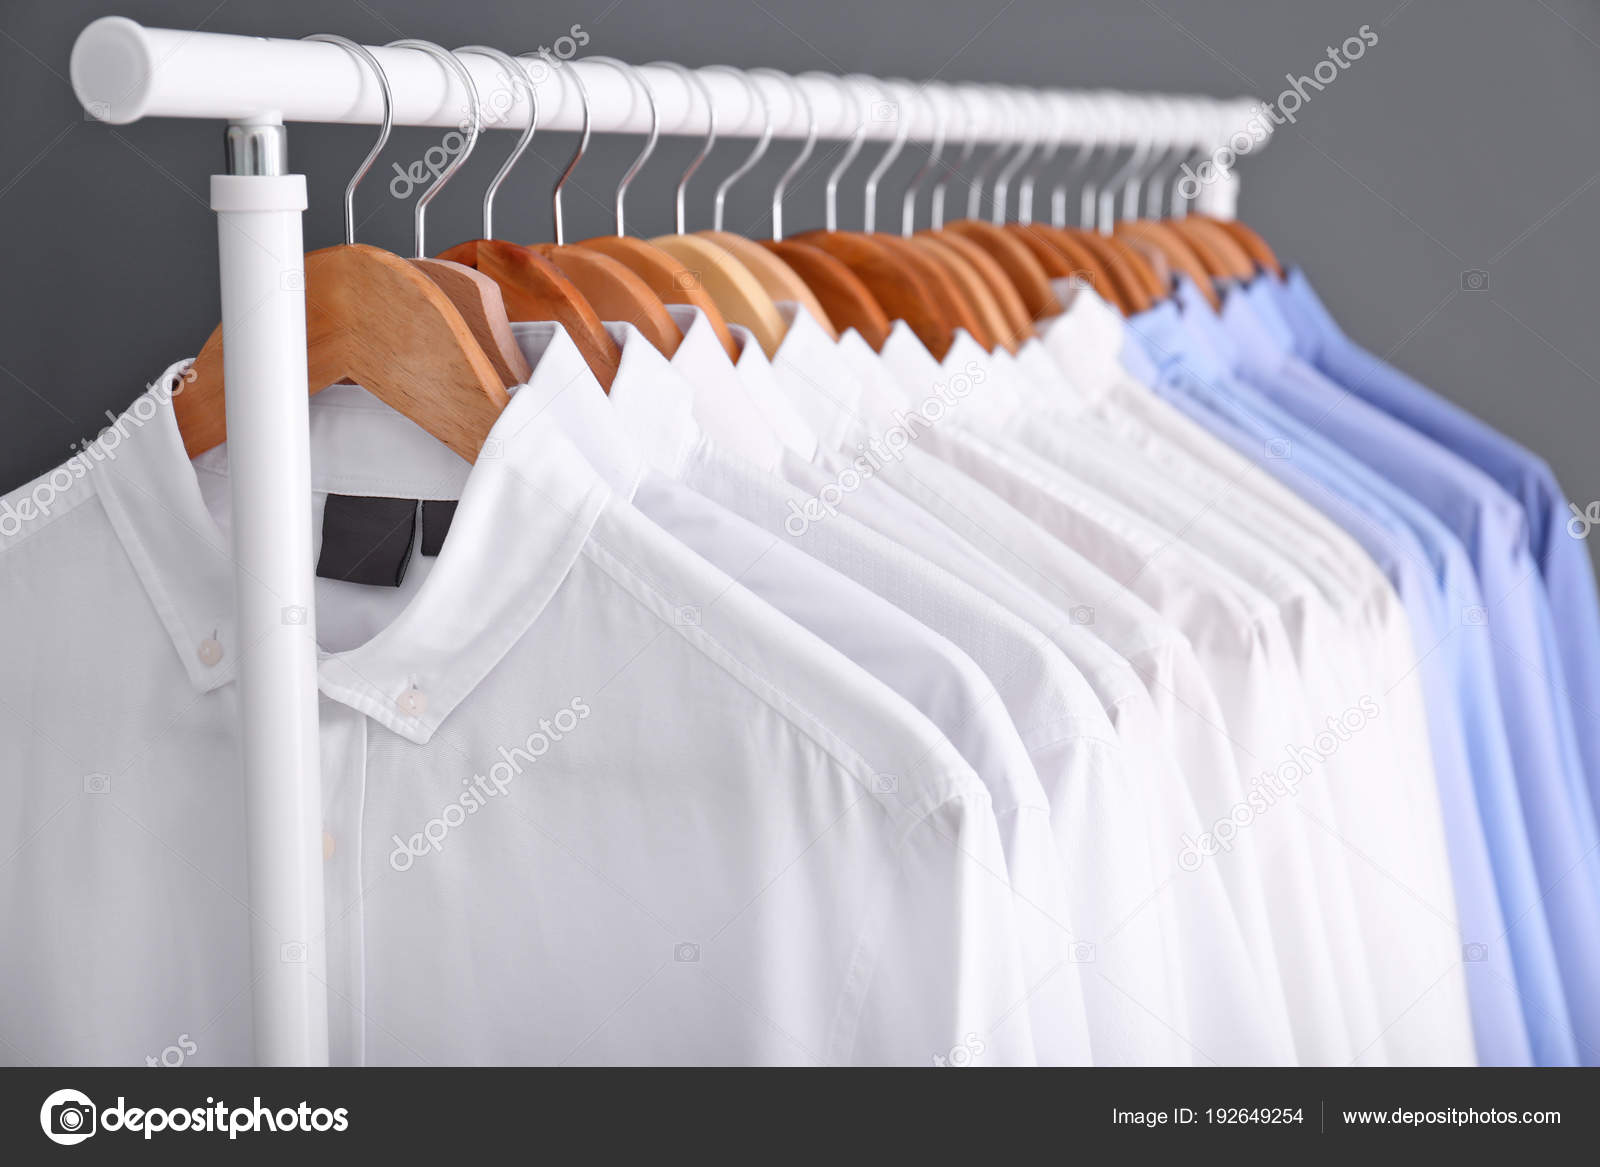 https://st3.depositphotos.com/16122460/19264/i/1600/depositphotos_192649254-stock-photo-rack-with-clean-clothes-on.jpg